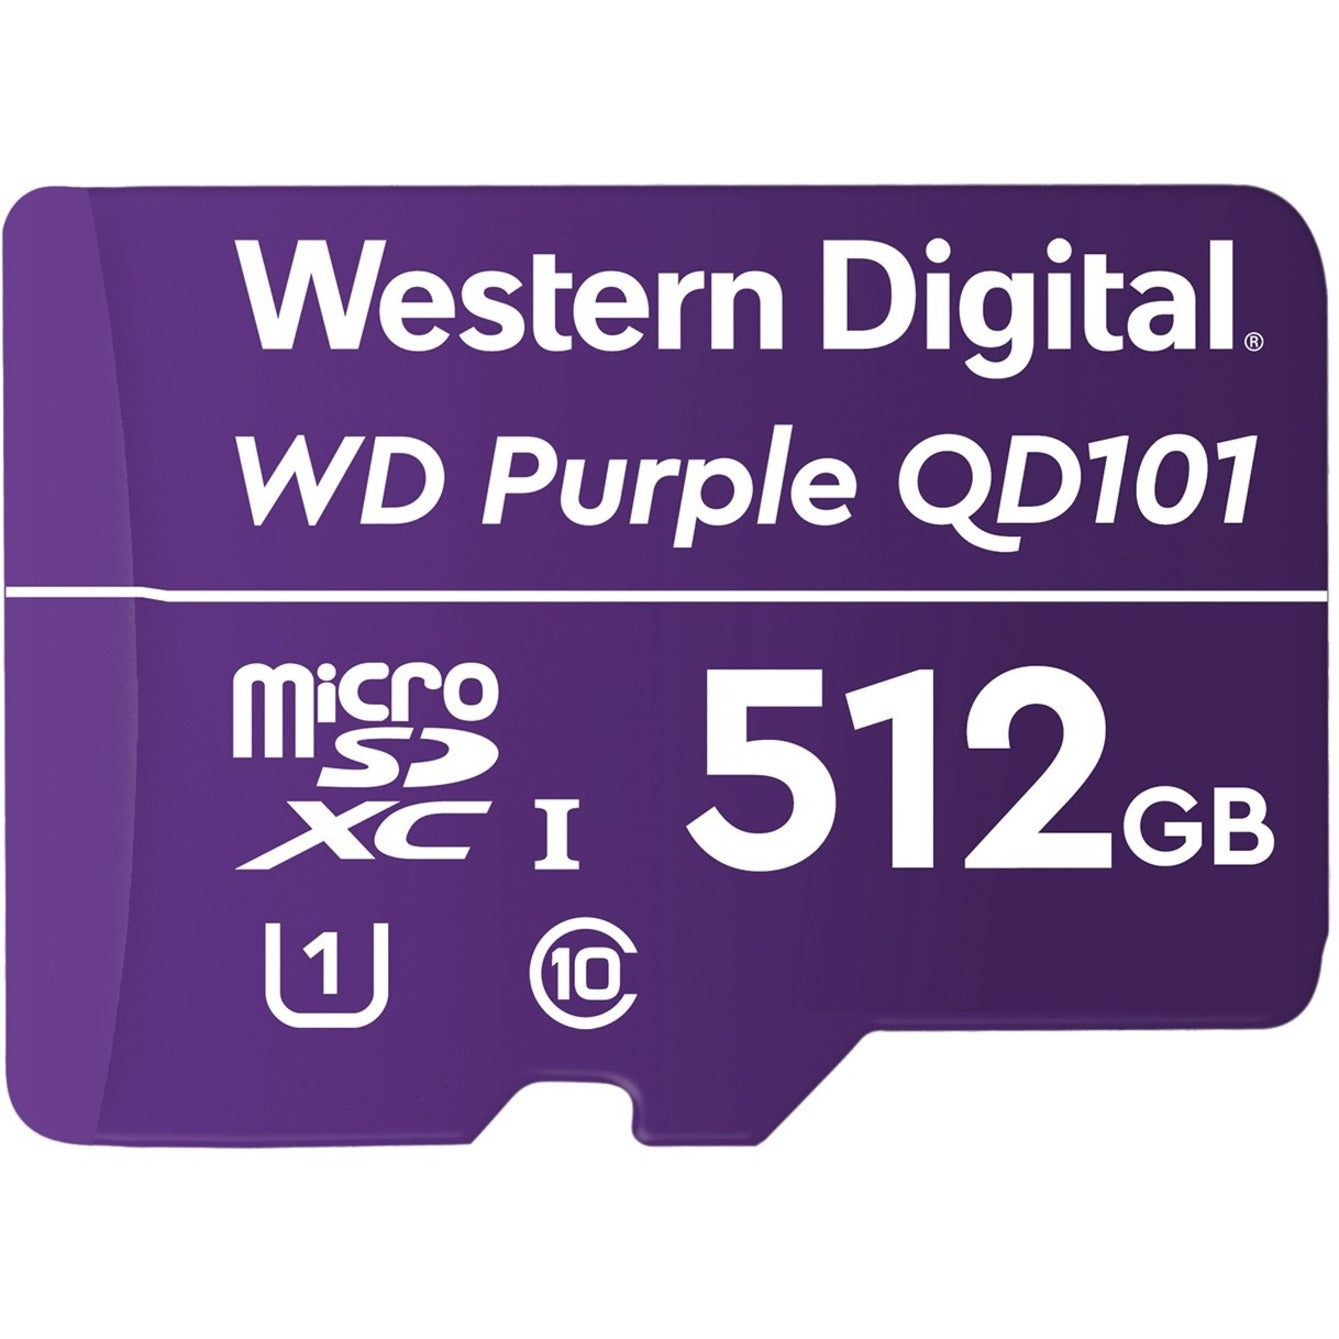 Western Digital WDD512G1P0C Purple™ SC QD101 512GB microSDXC 3 Year Limited Warranty  Western Digital WDD512G1P0C Viola™ SC QD101 512GB microSDXC 3 Anni Garanzia Limitata